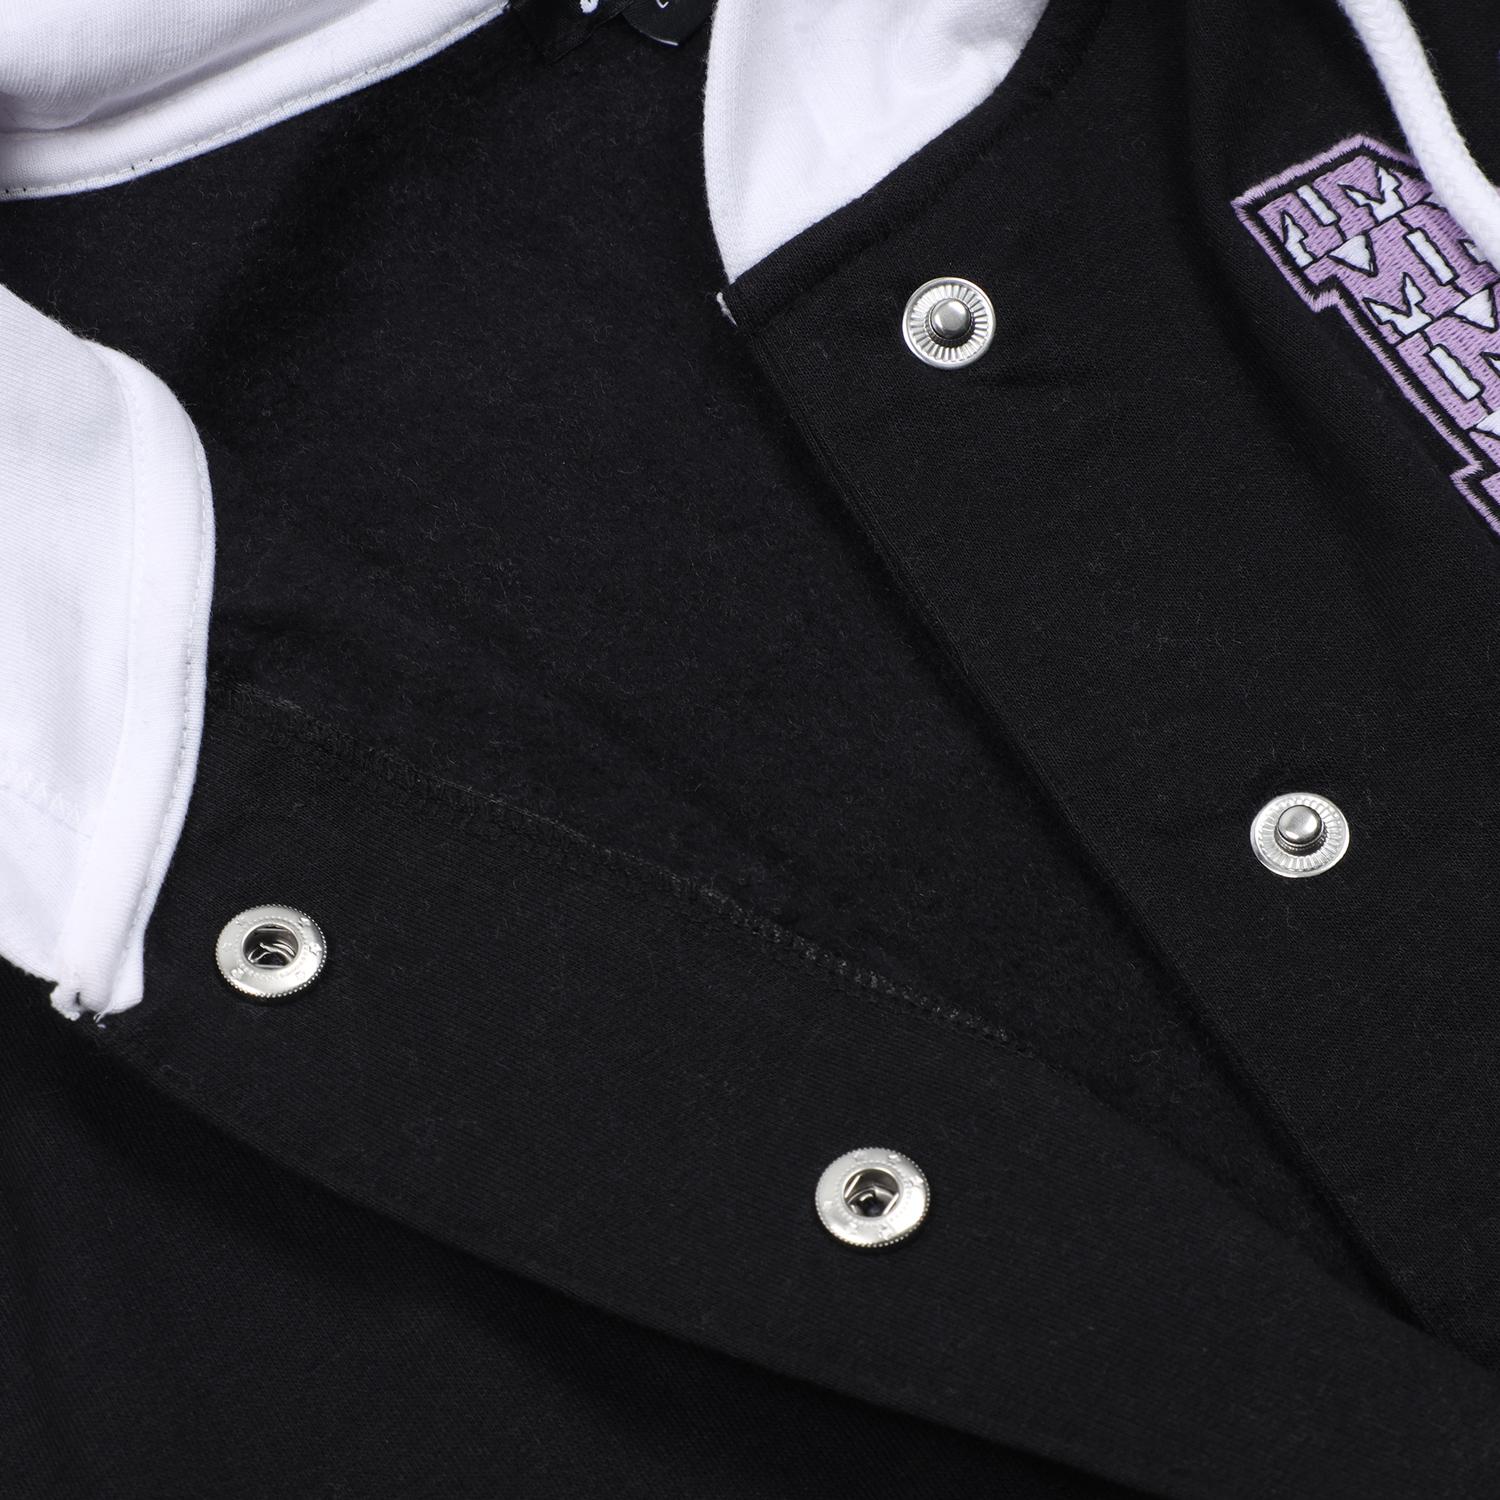 Women's fleece SweatShirt Jacket - White/Black